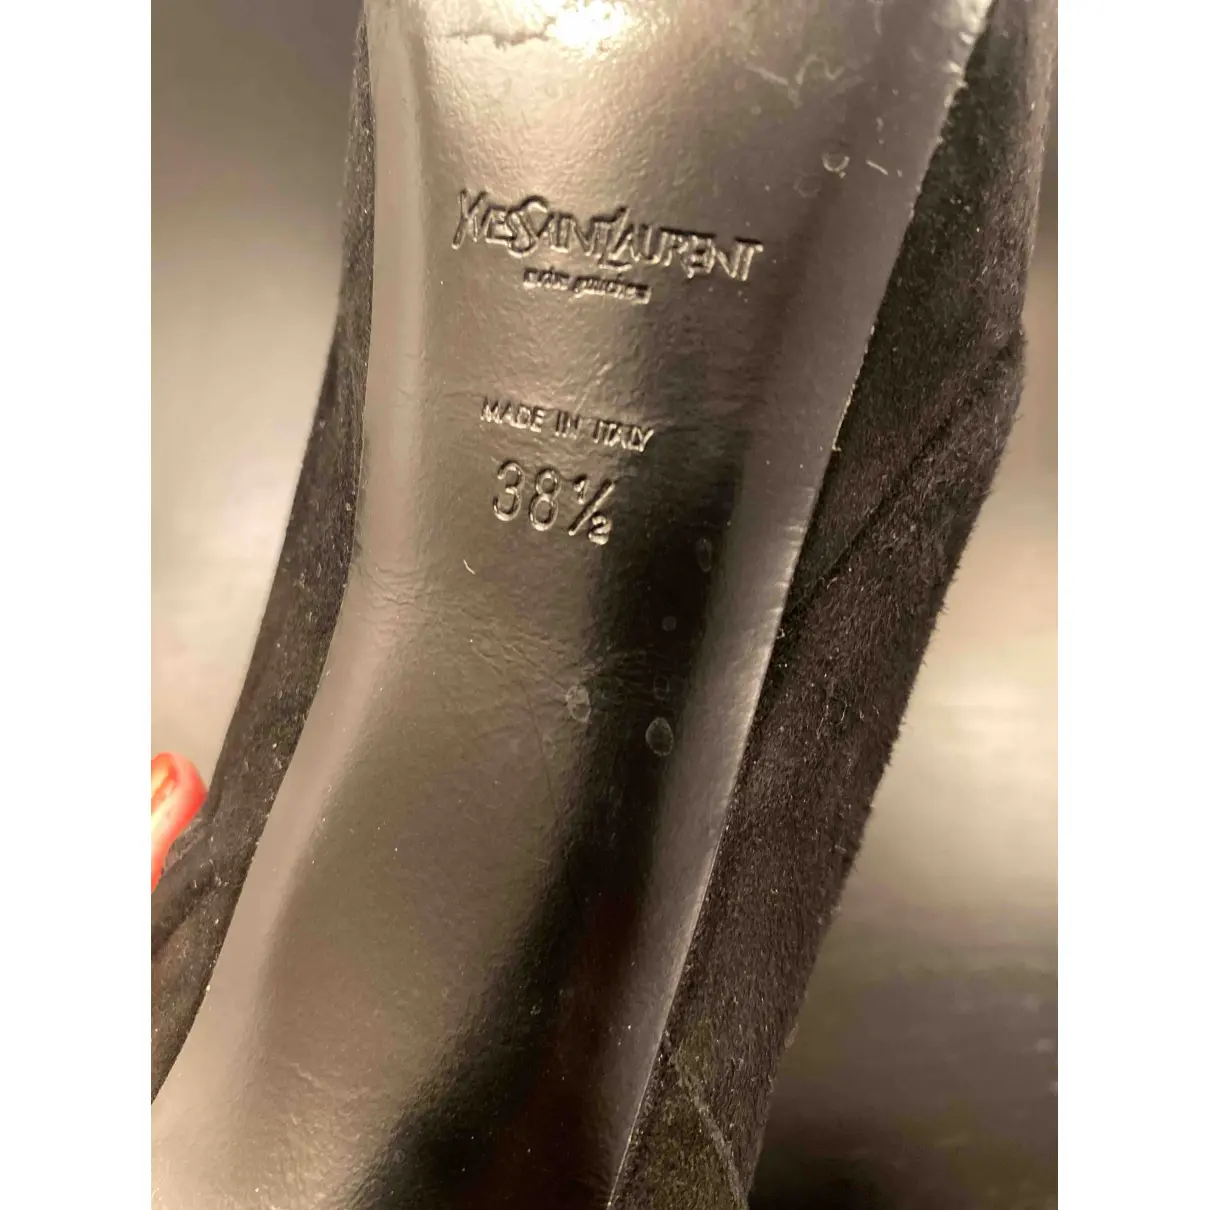 Luxury Yves Saint Laurent Ankle boots Women